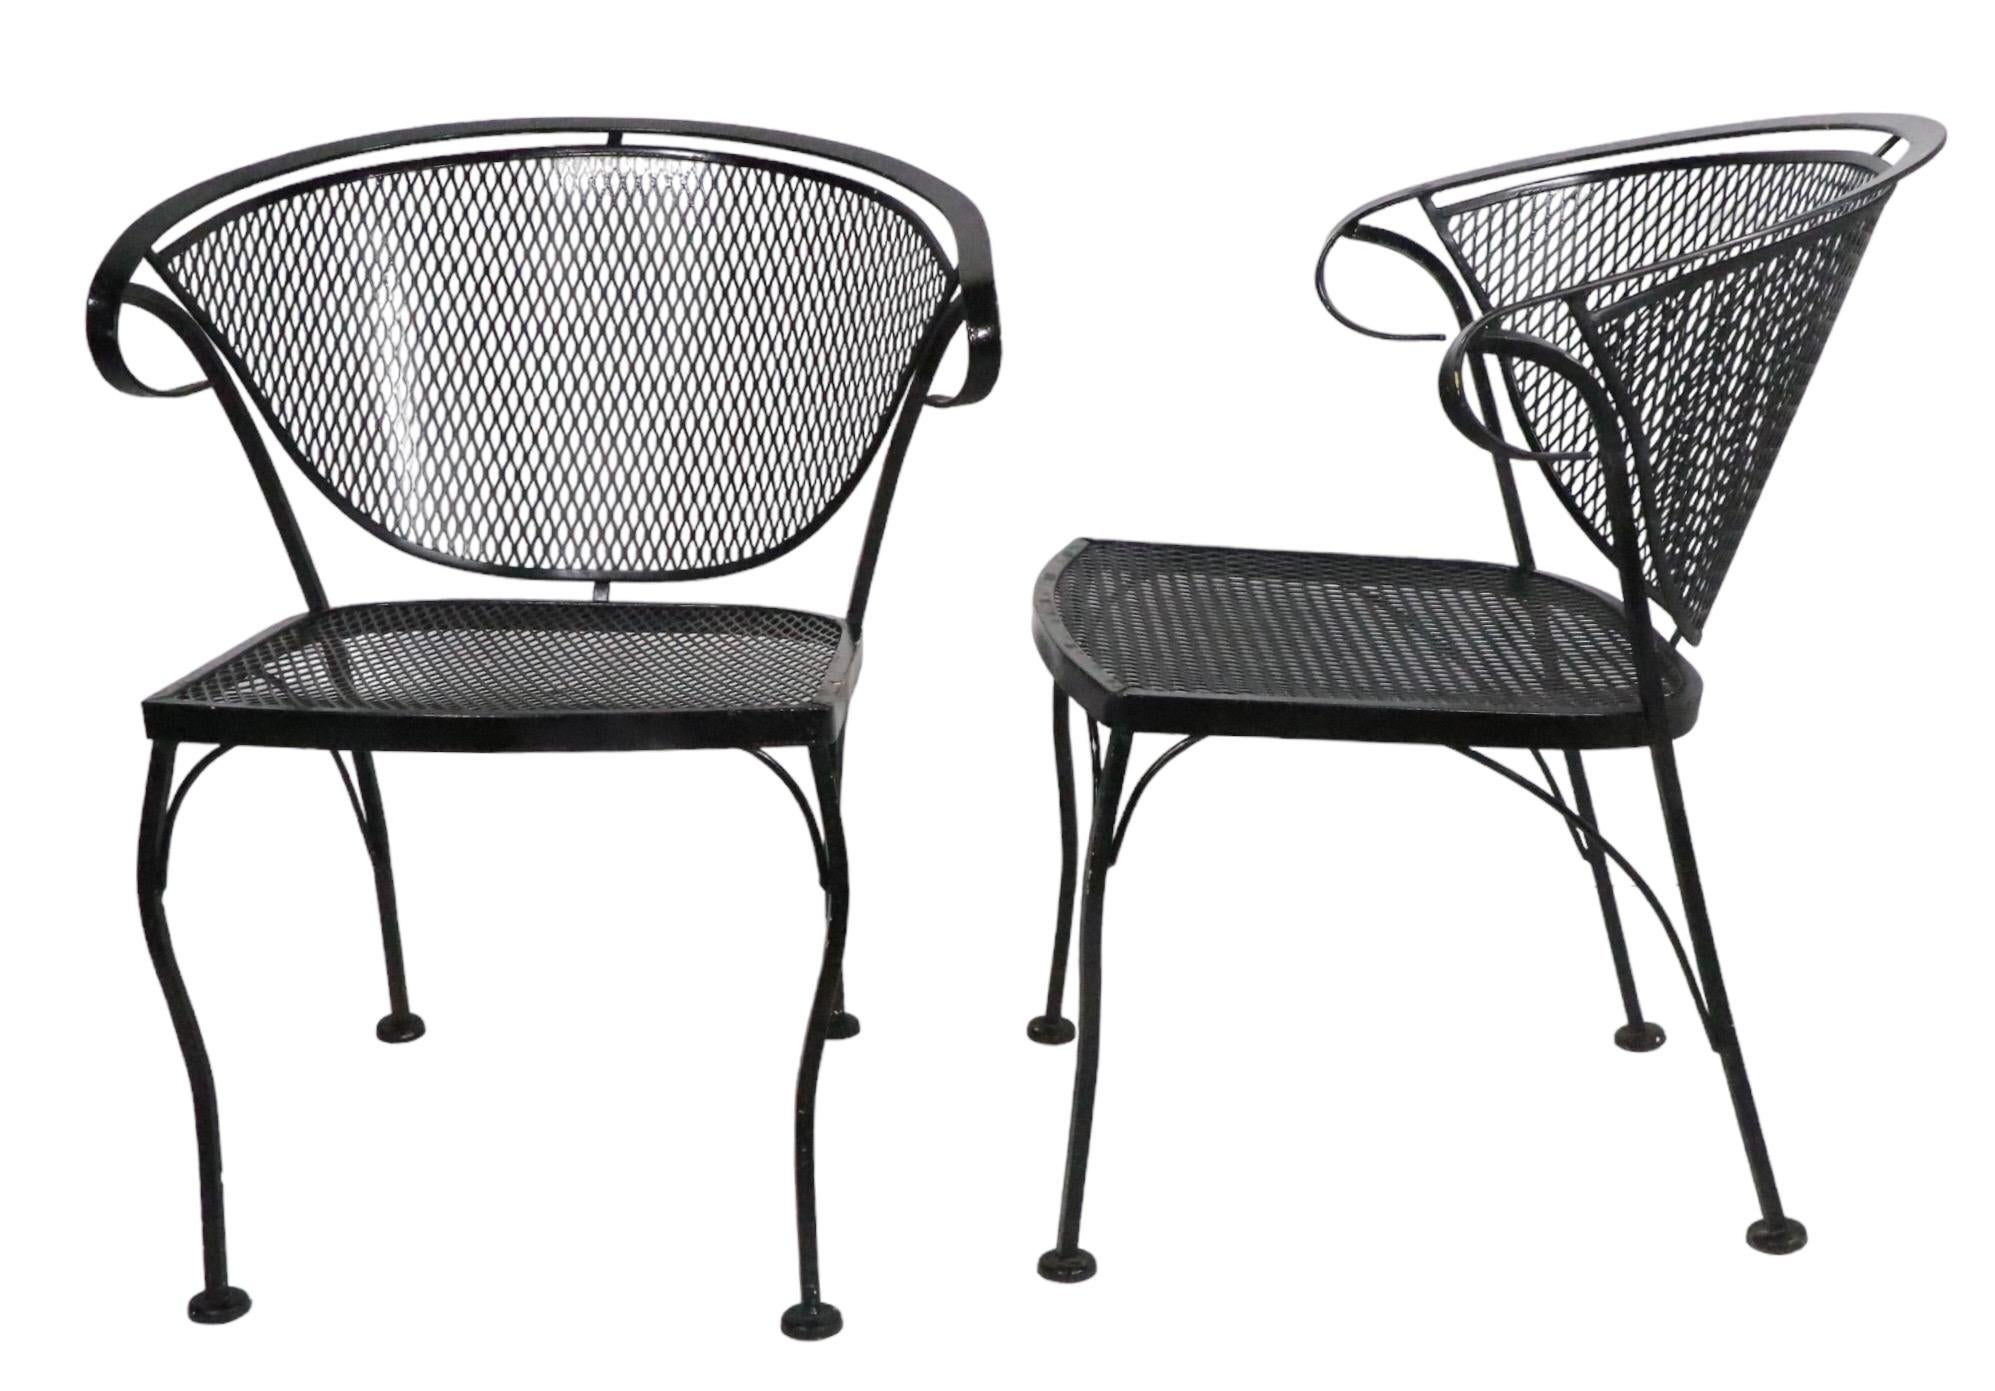 Pr. Vintage Garden Patio Poolside Dining Chairs att. to Woodard c 1950/1970's For Sale 1